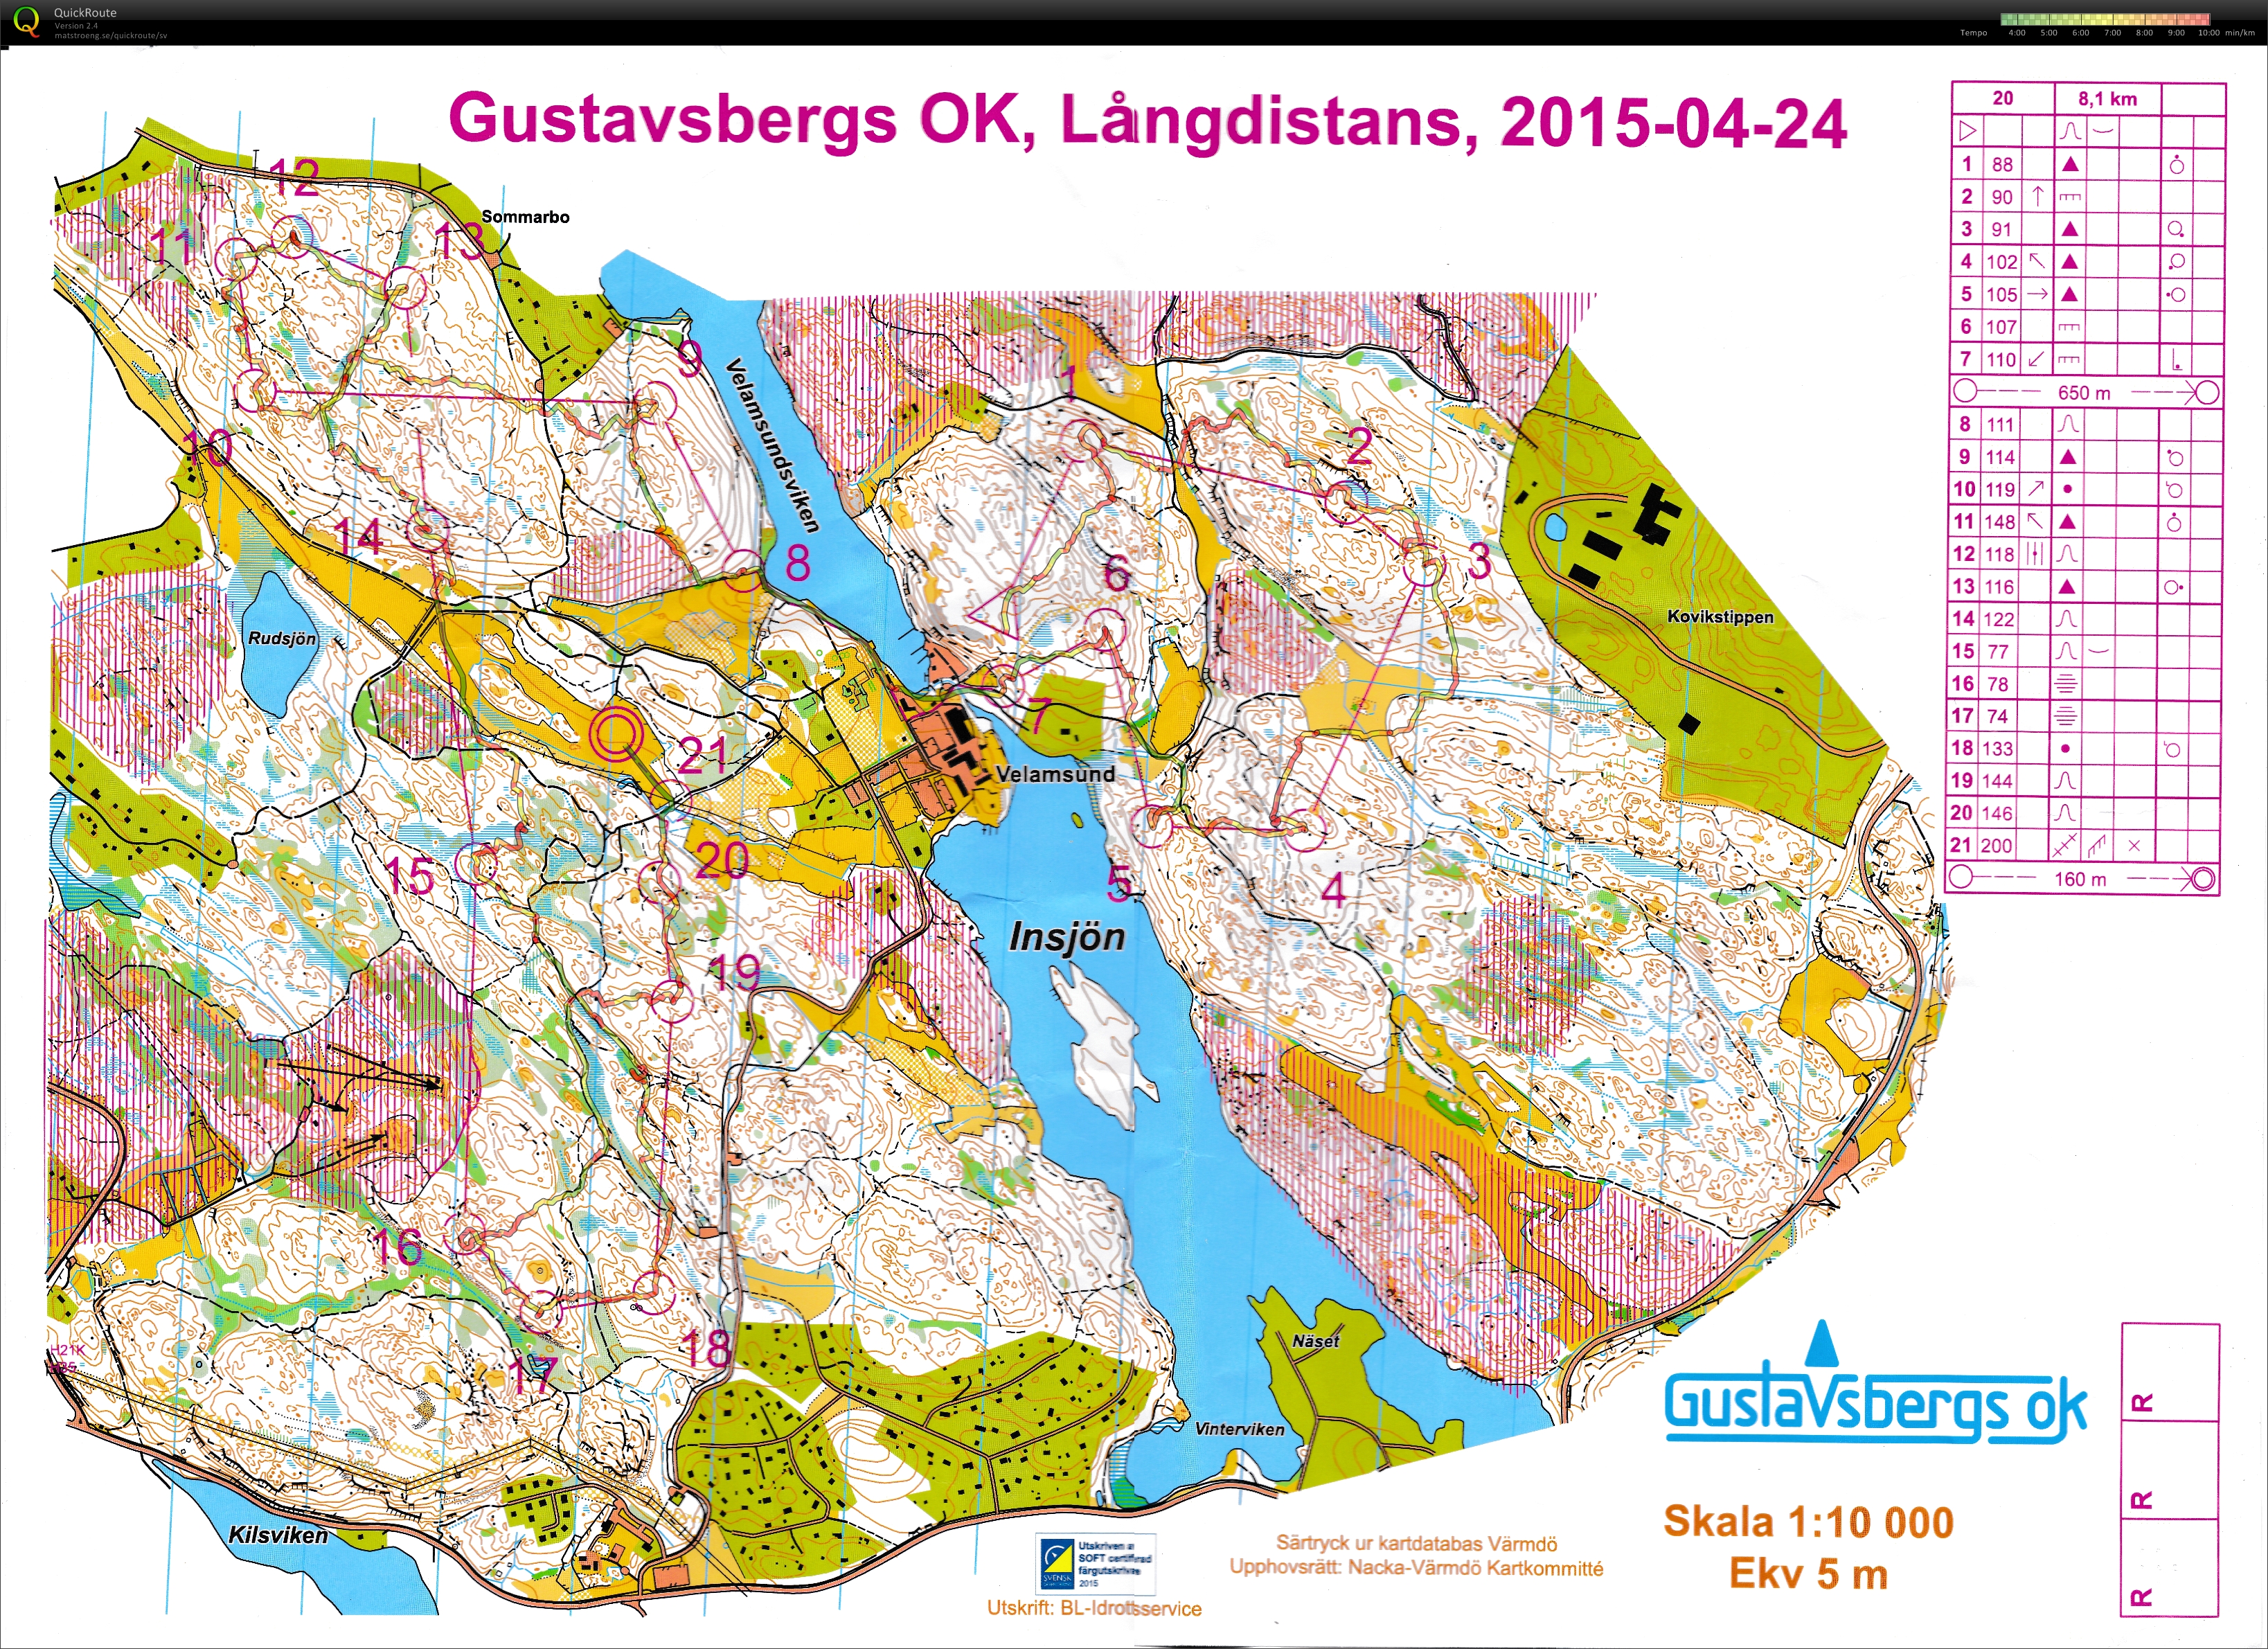 Gustavsbergs OK, Långdistans (25-04-2015)